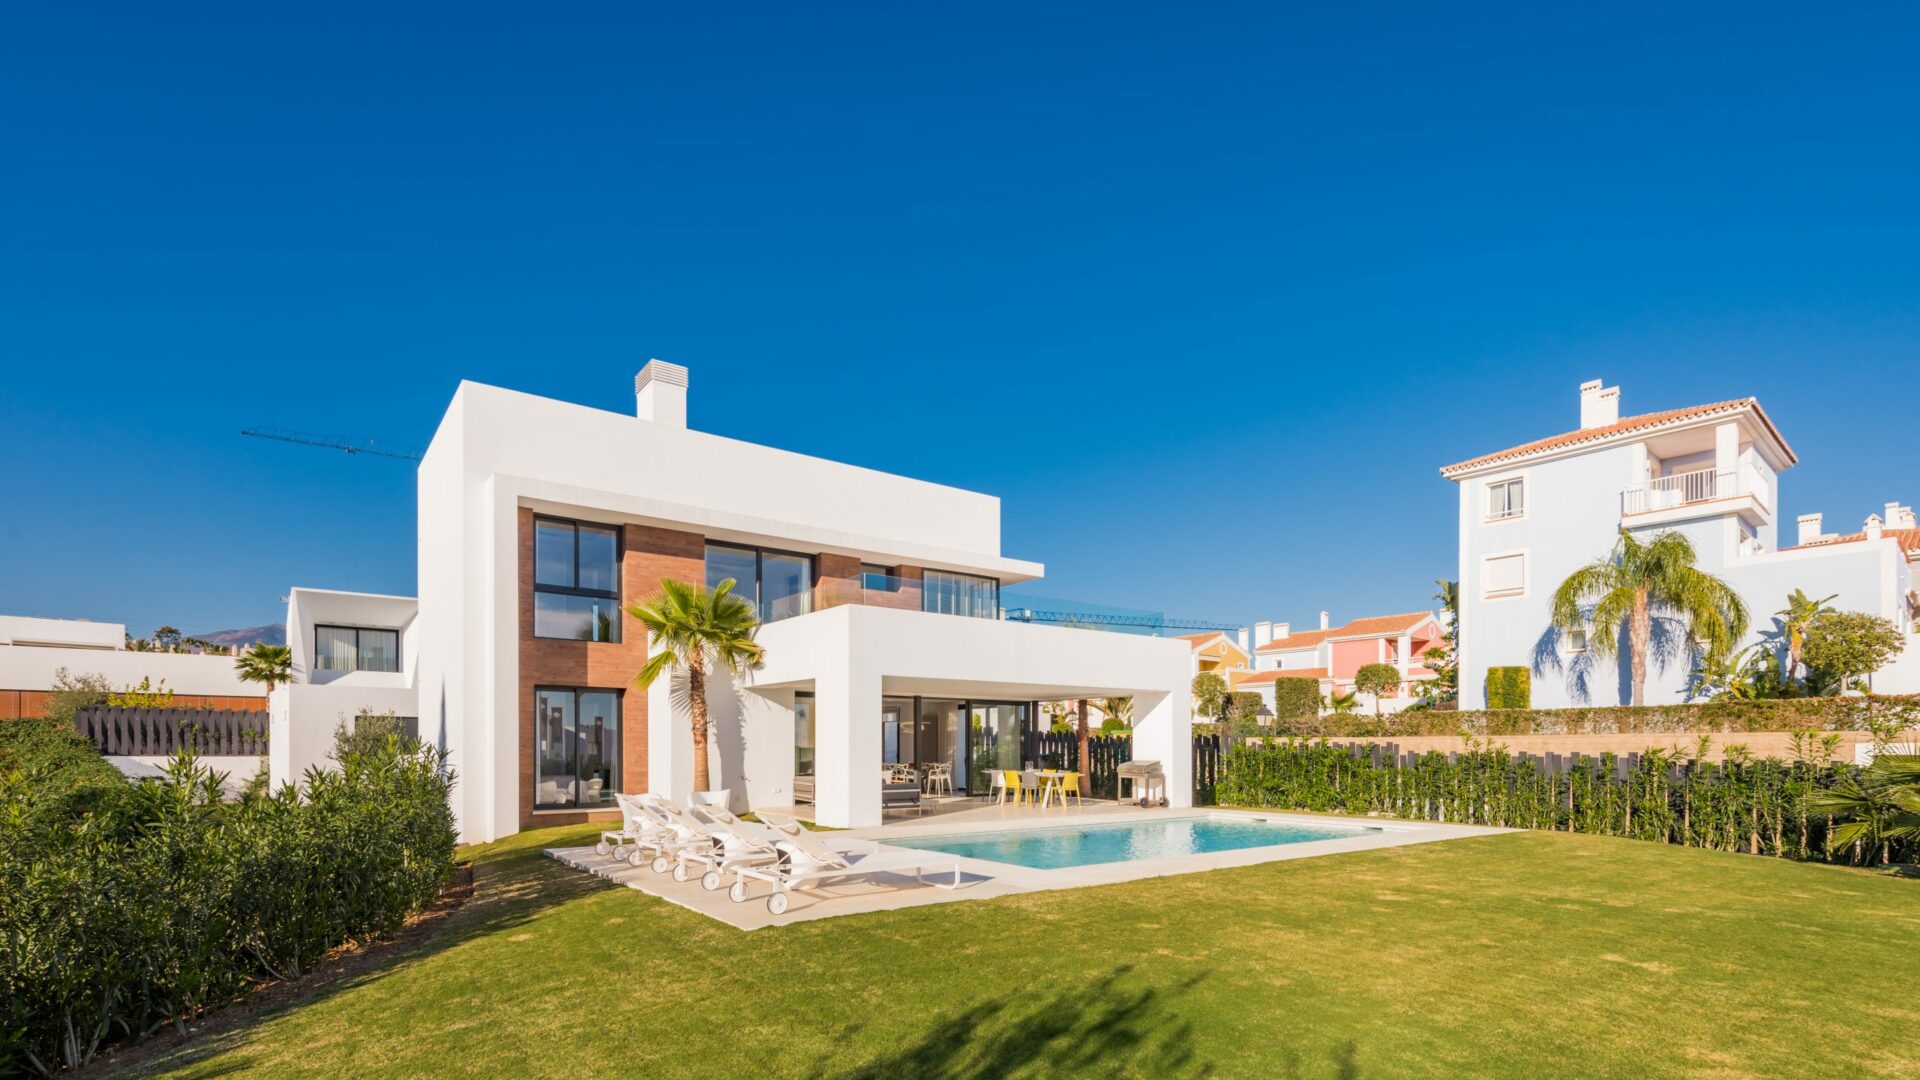 Get ready for a fantastic villa in Costa del Sol